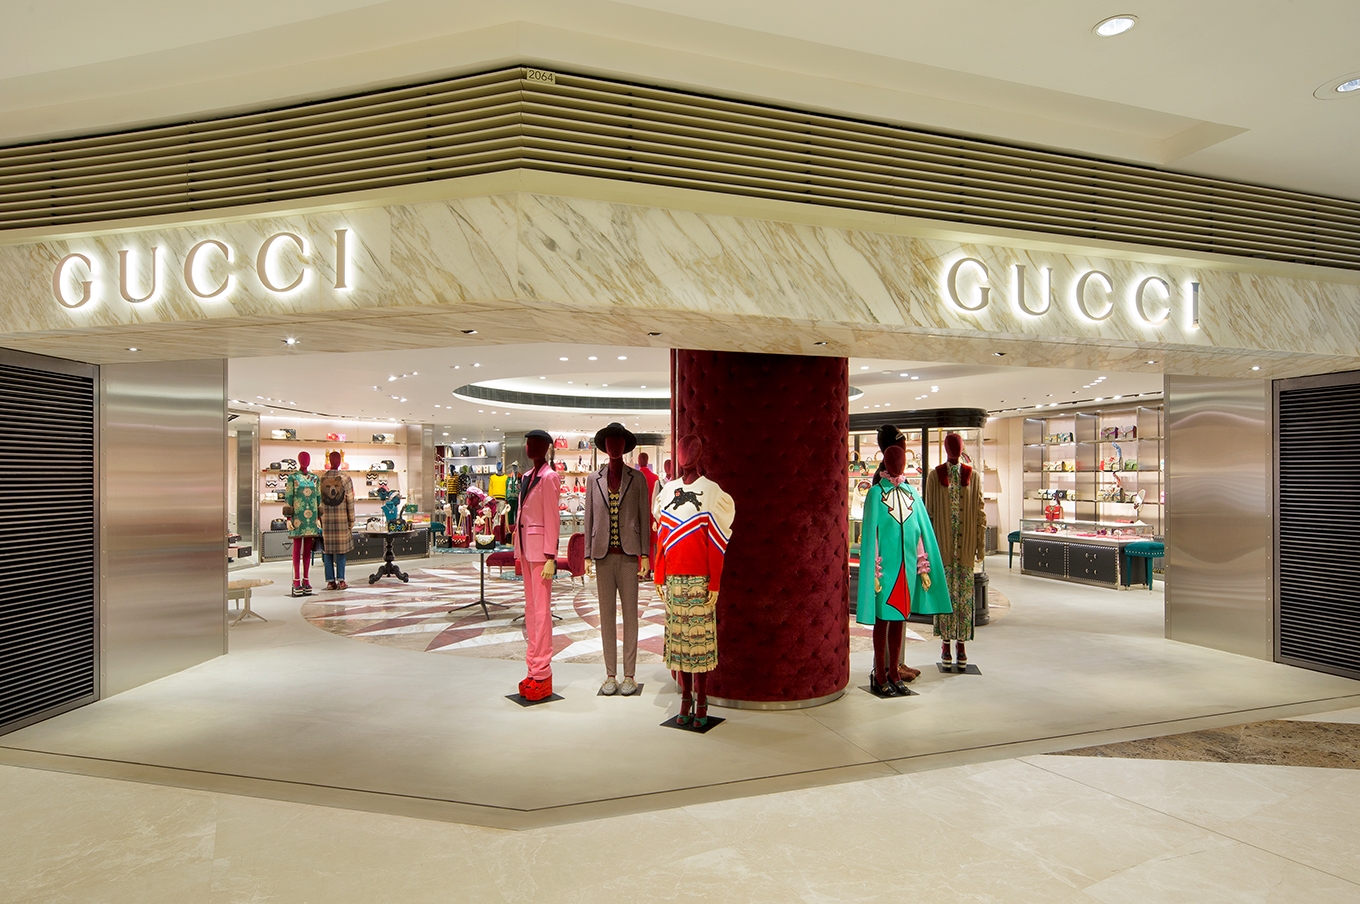 Gucci - Fashion Mall